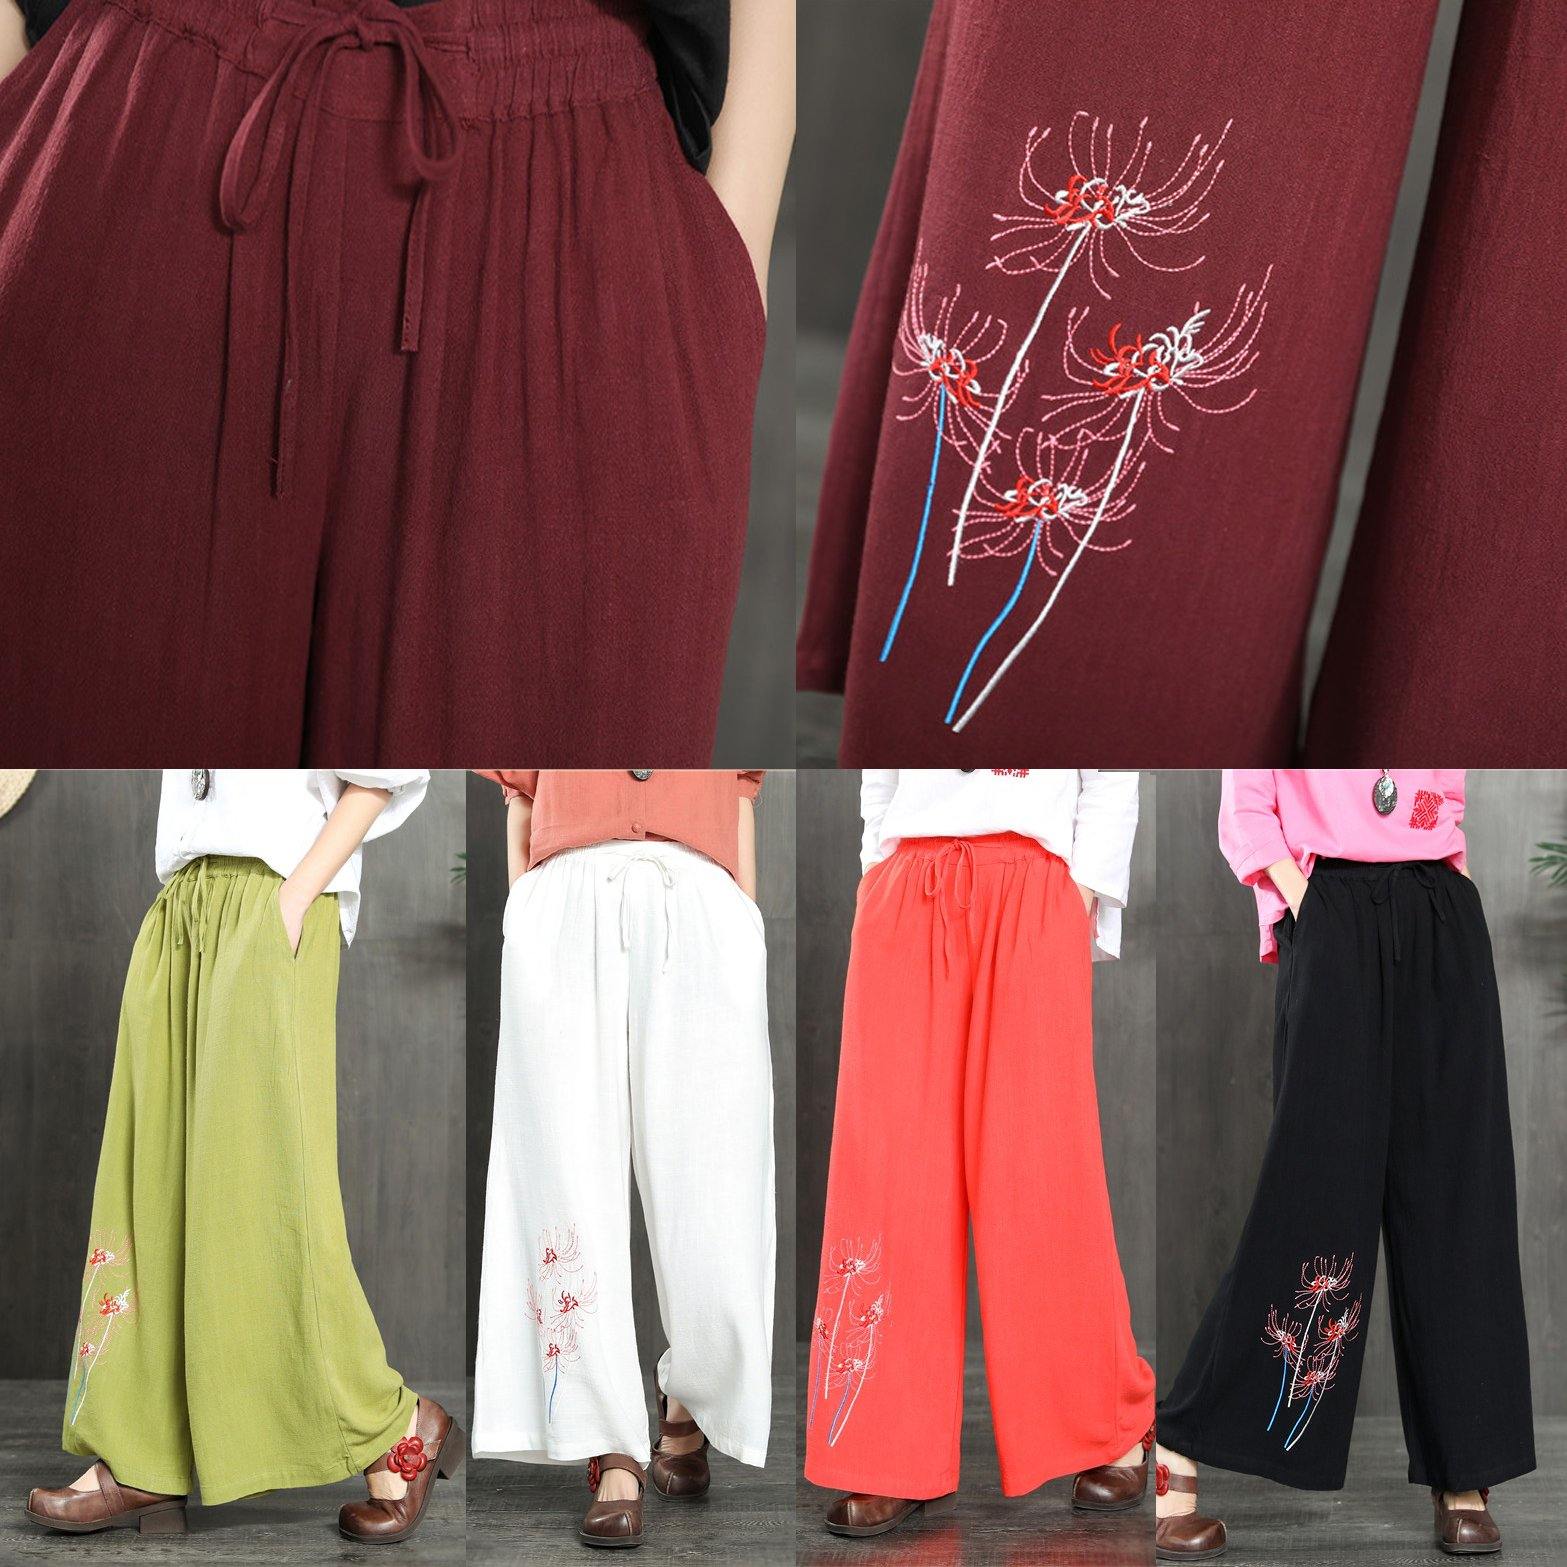 new burgundy linen embroidery wide leg pants plus size slim women trousers - Omychic